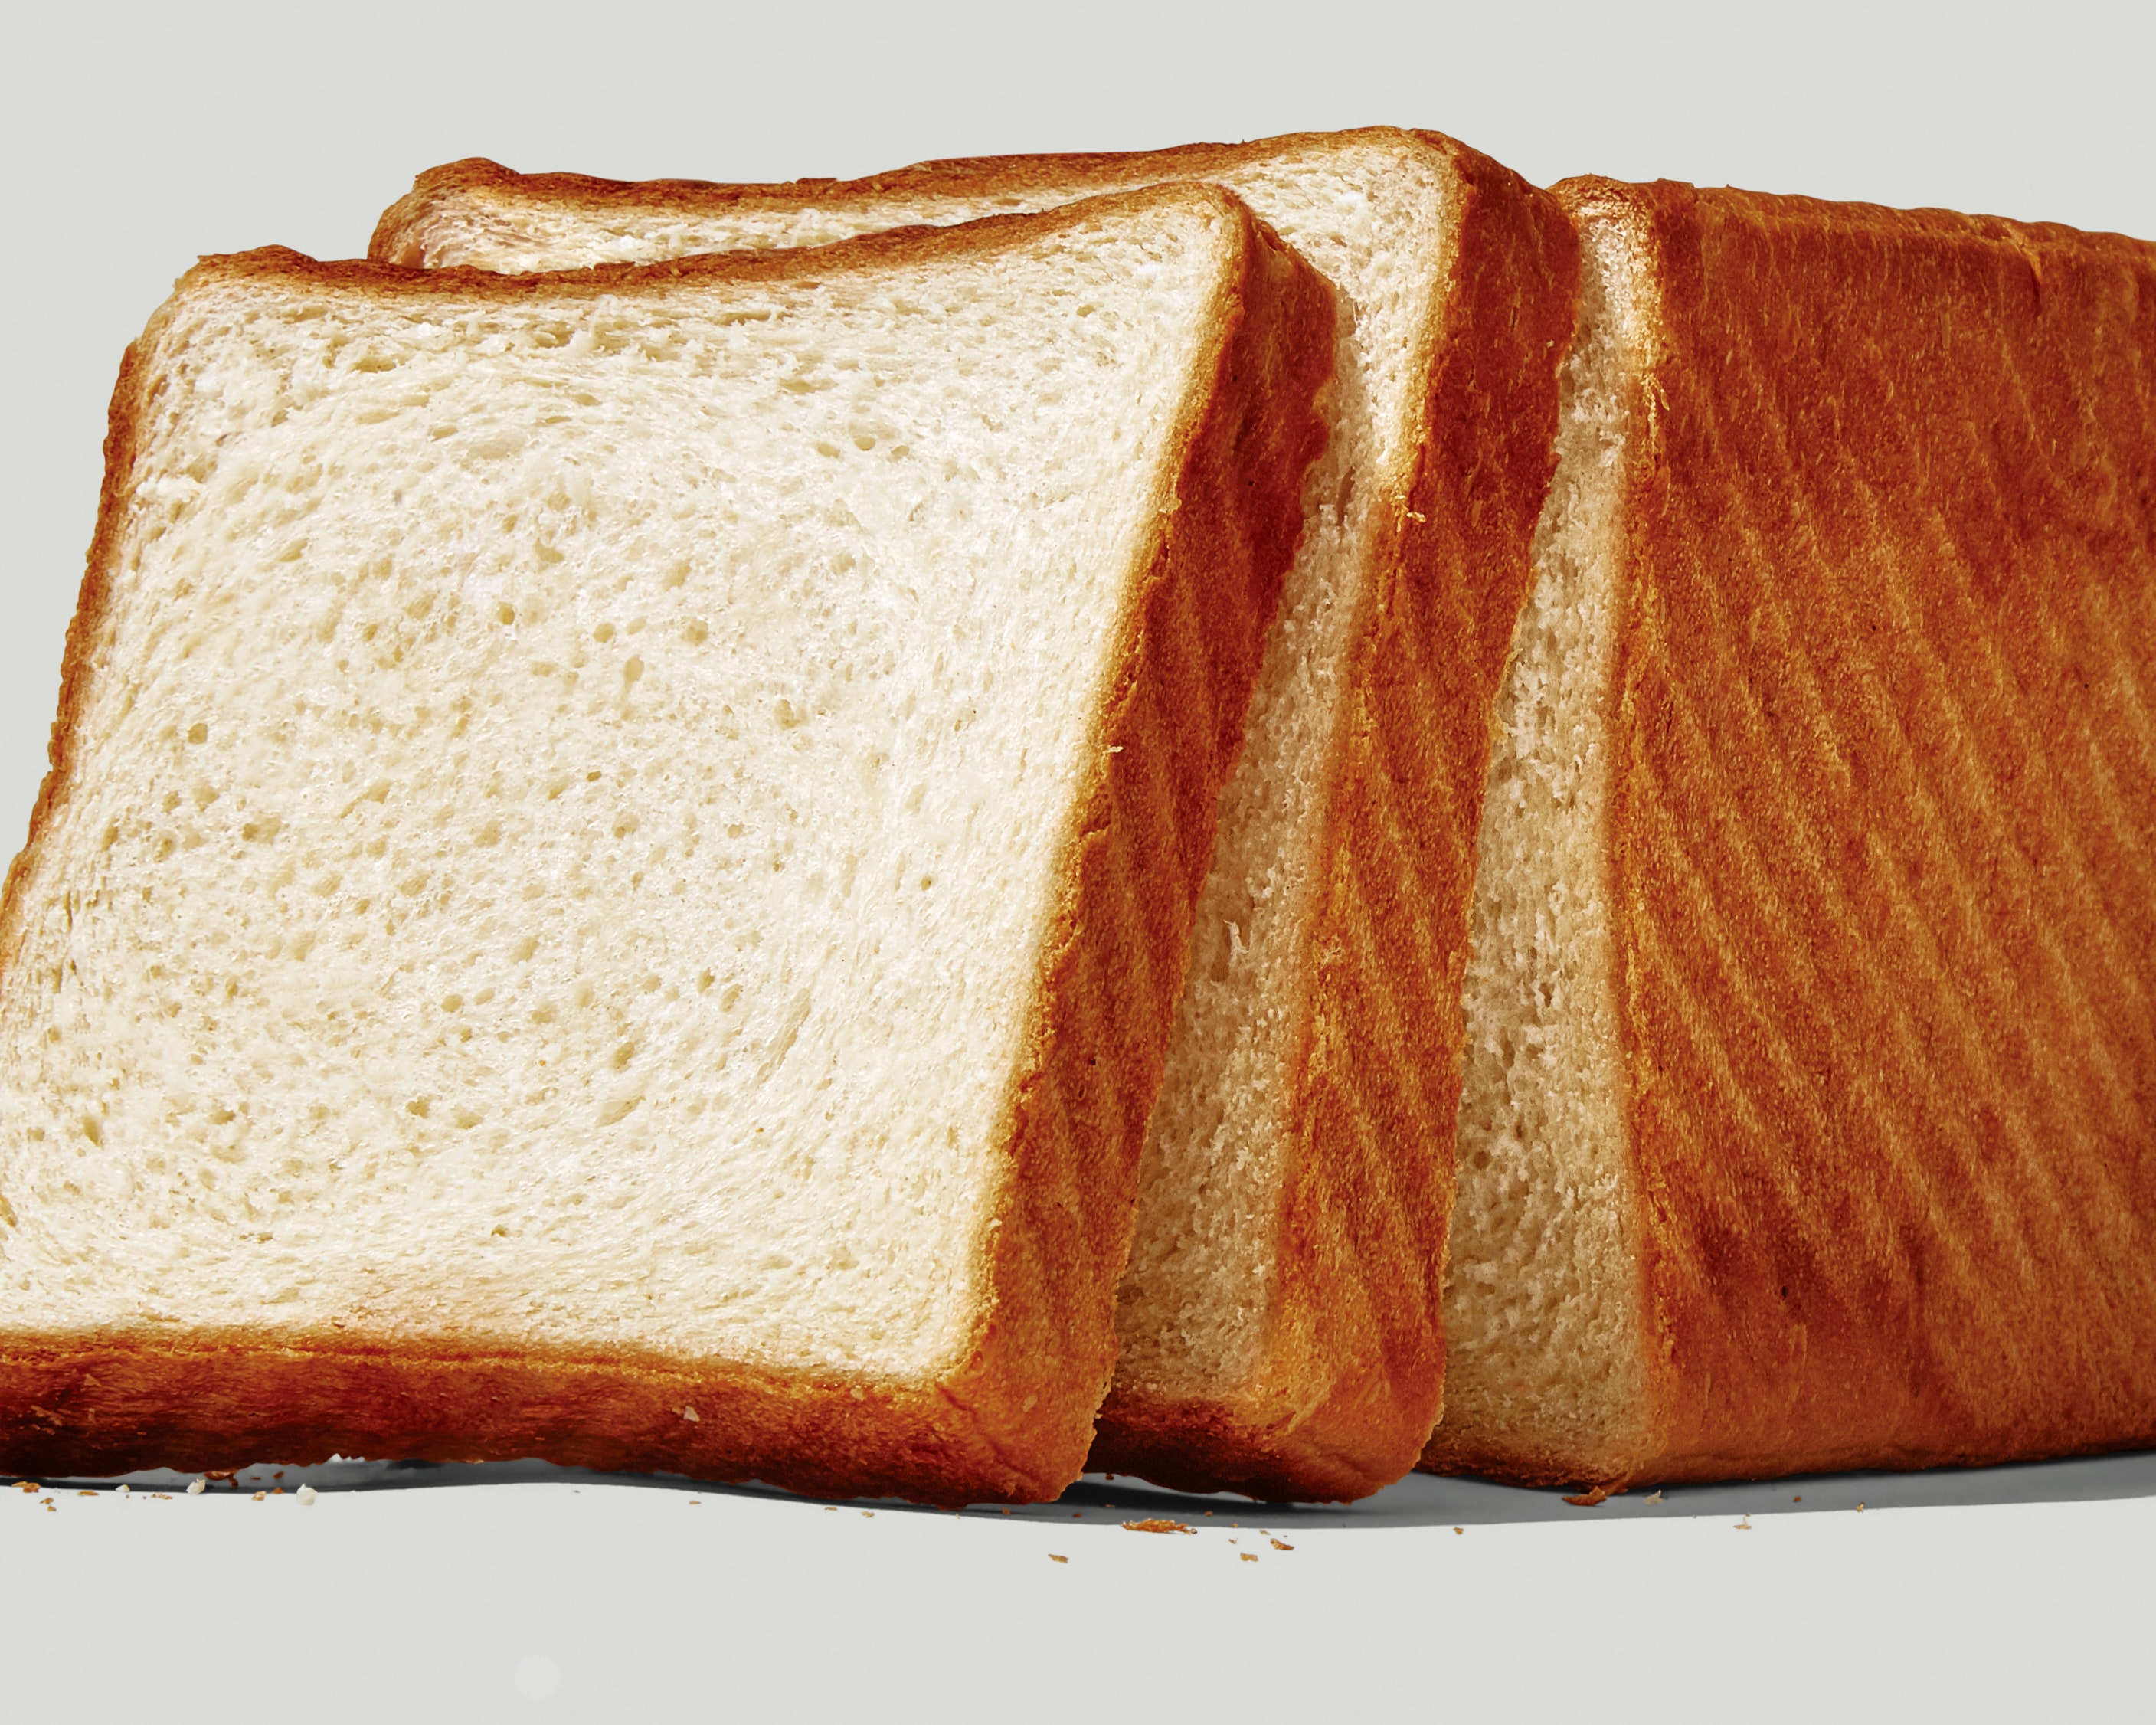 Image Bread